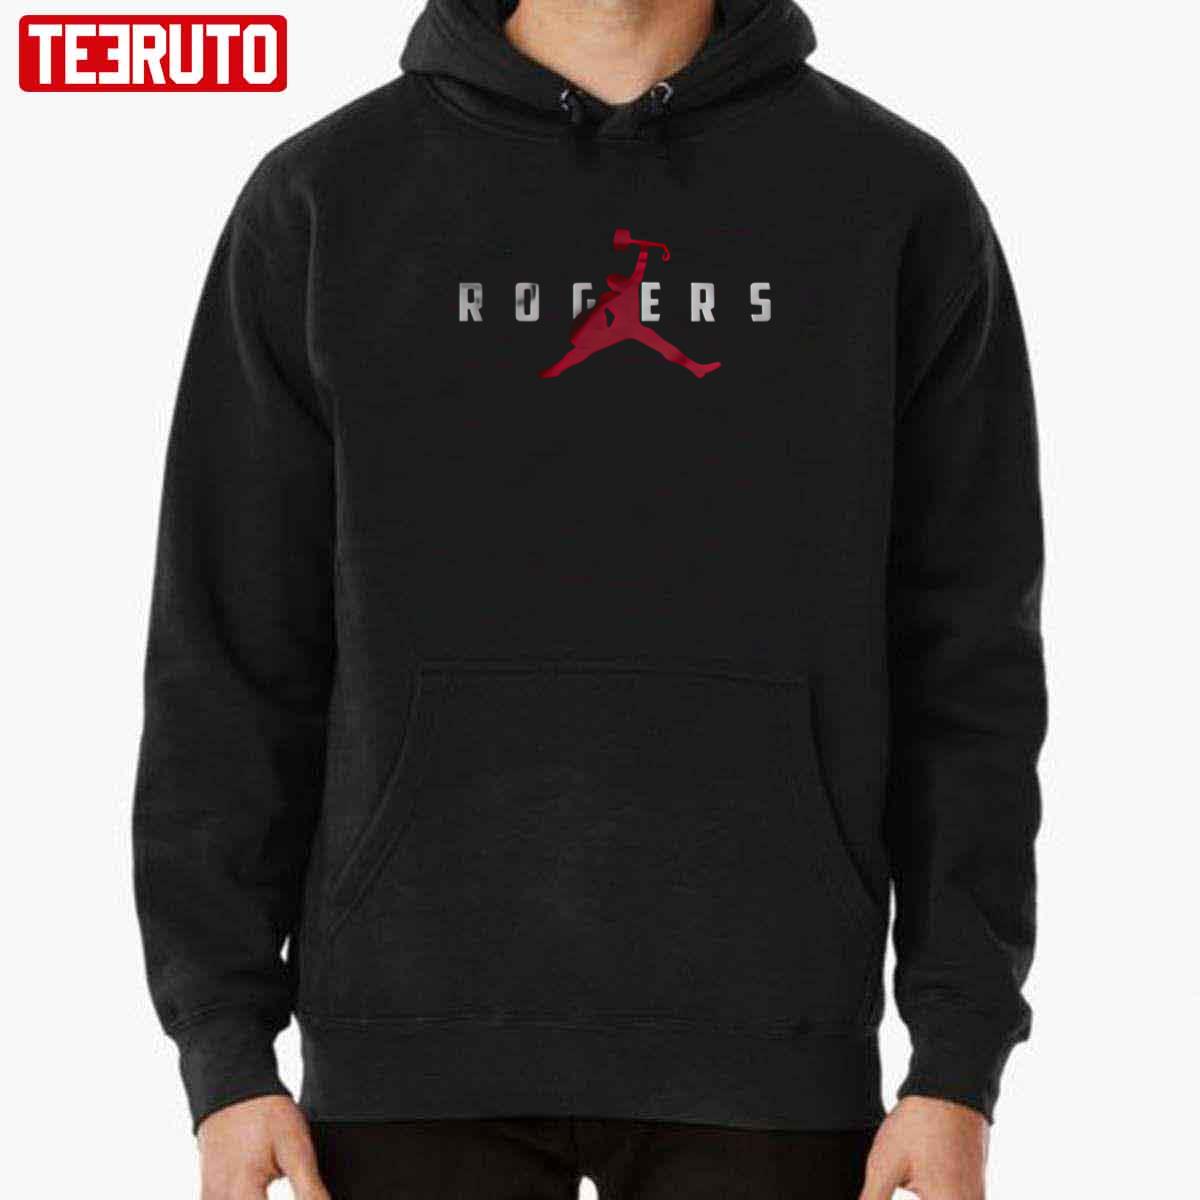 Roger Nike And Jordan Version Unisex T-Shirt - Teeruto